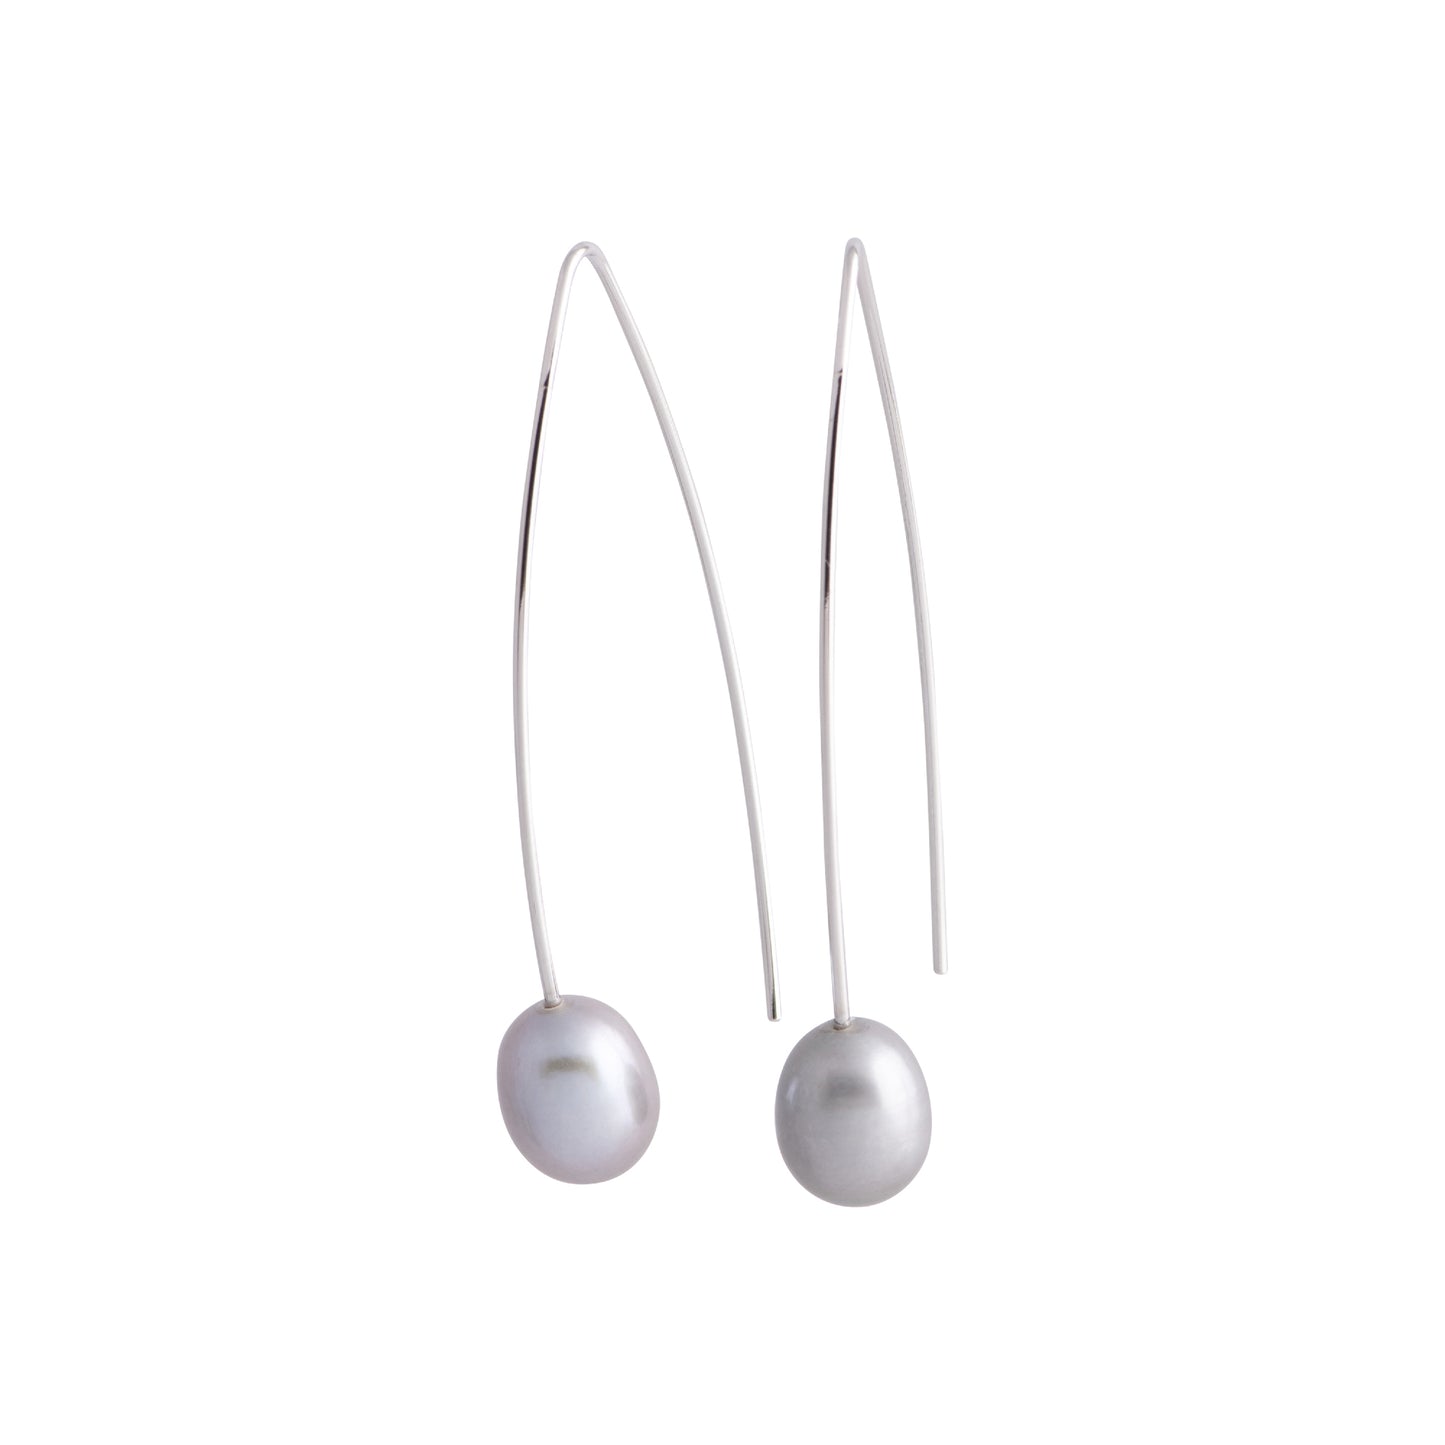 Ailani - Silver-tone pearl drop earrings (Silver pearls)